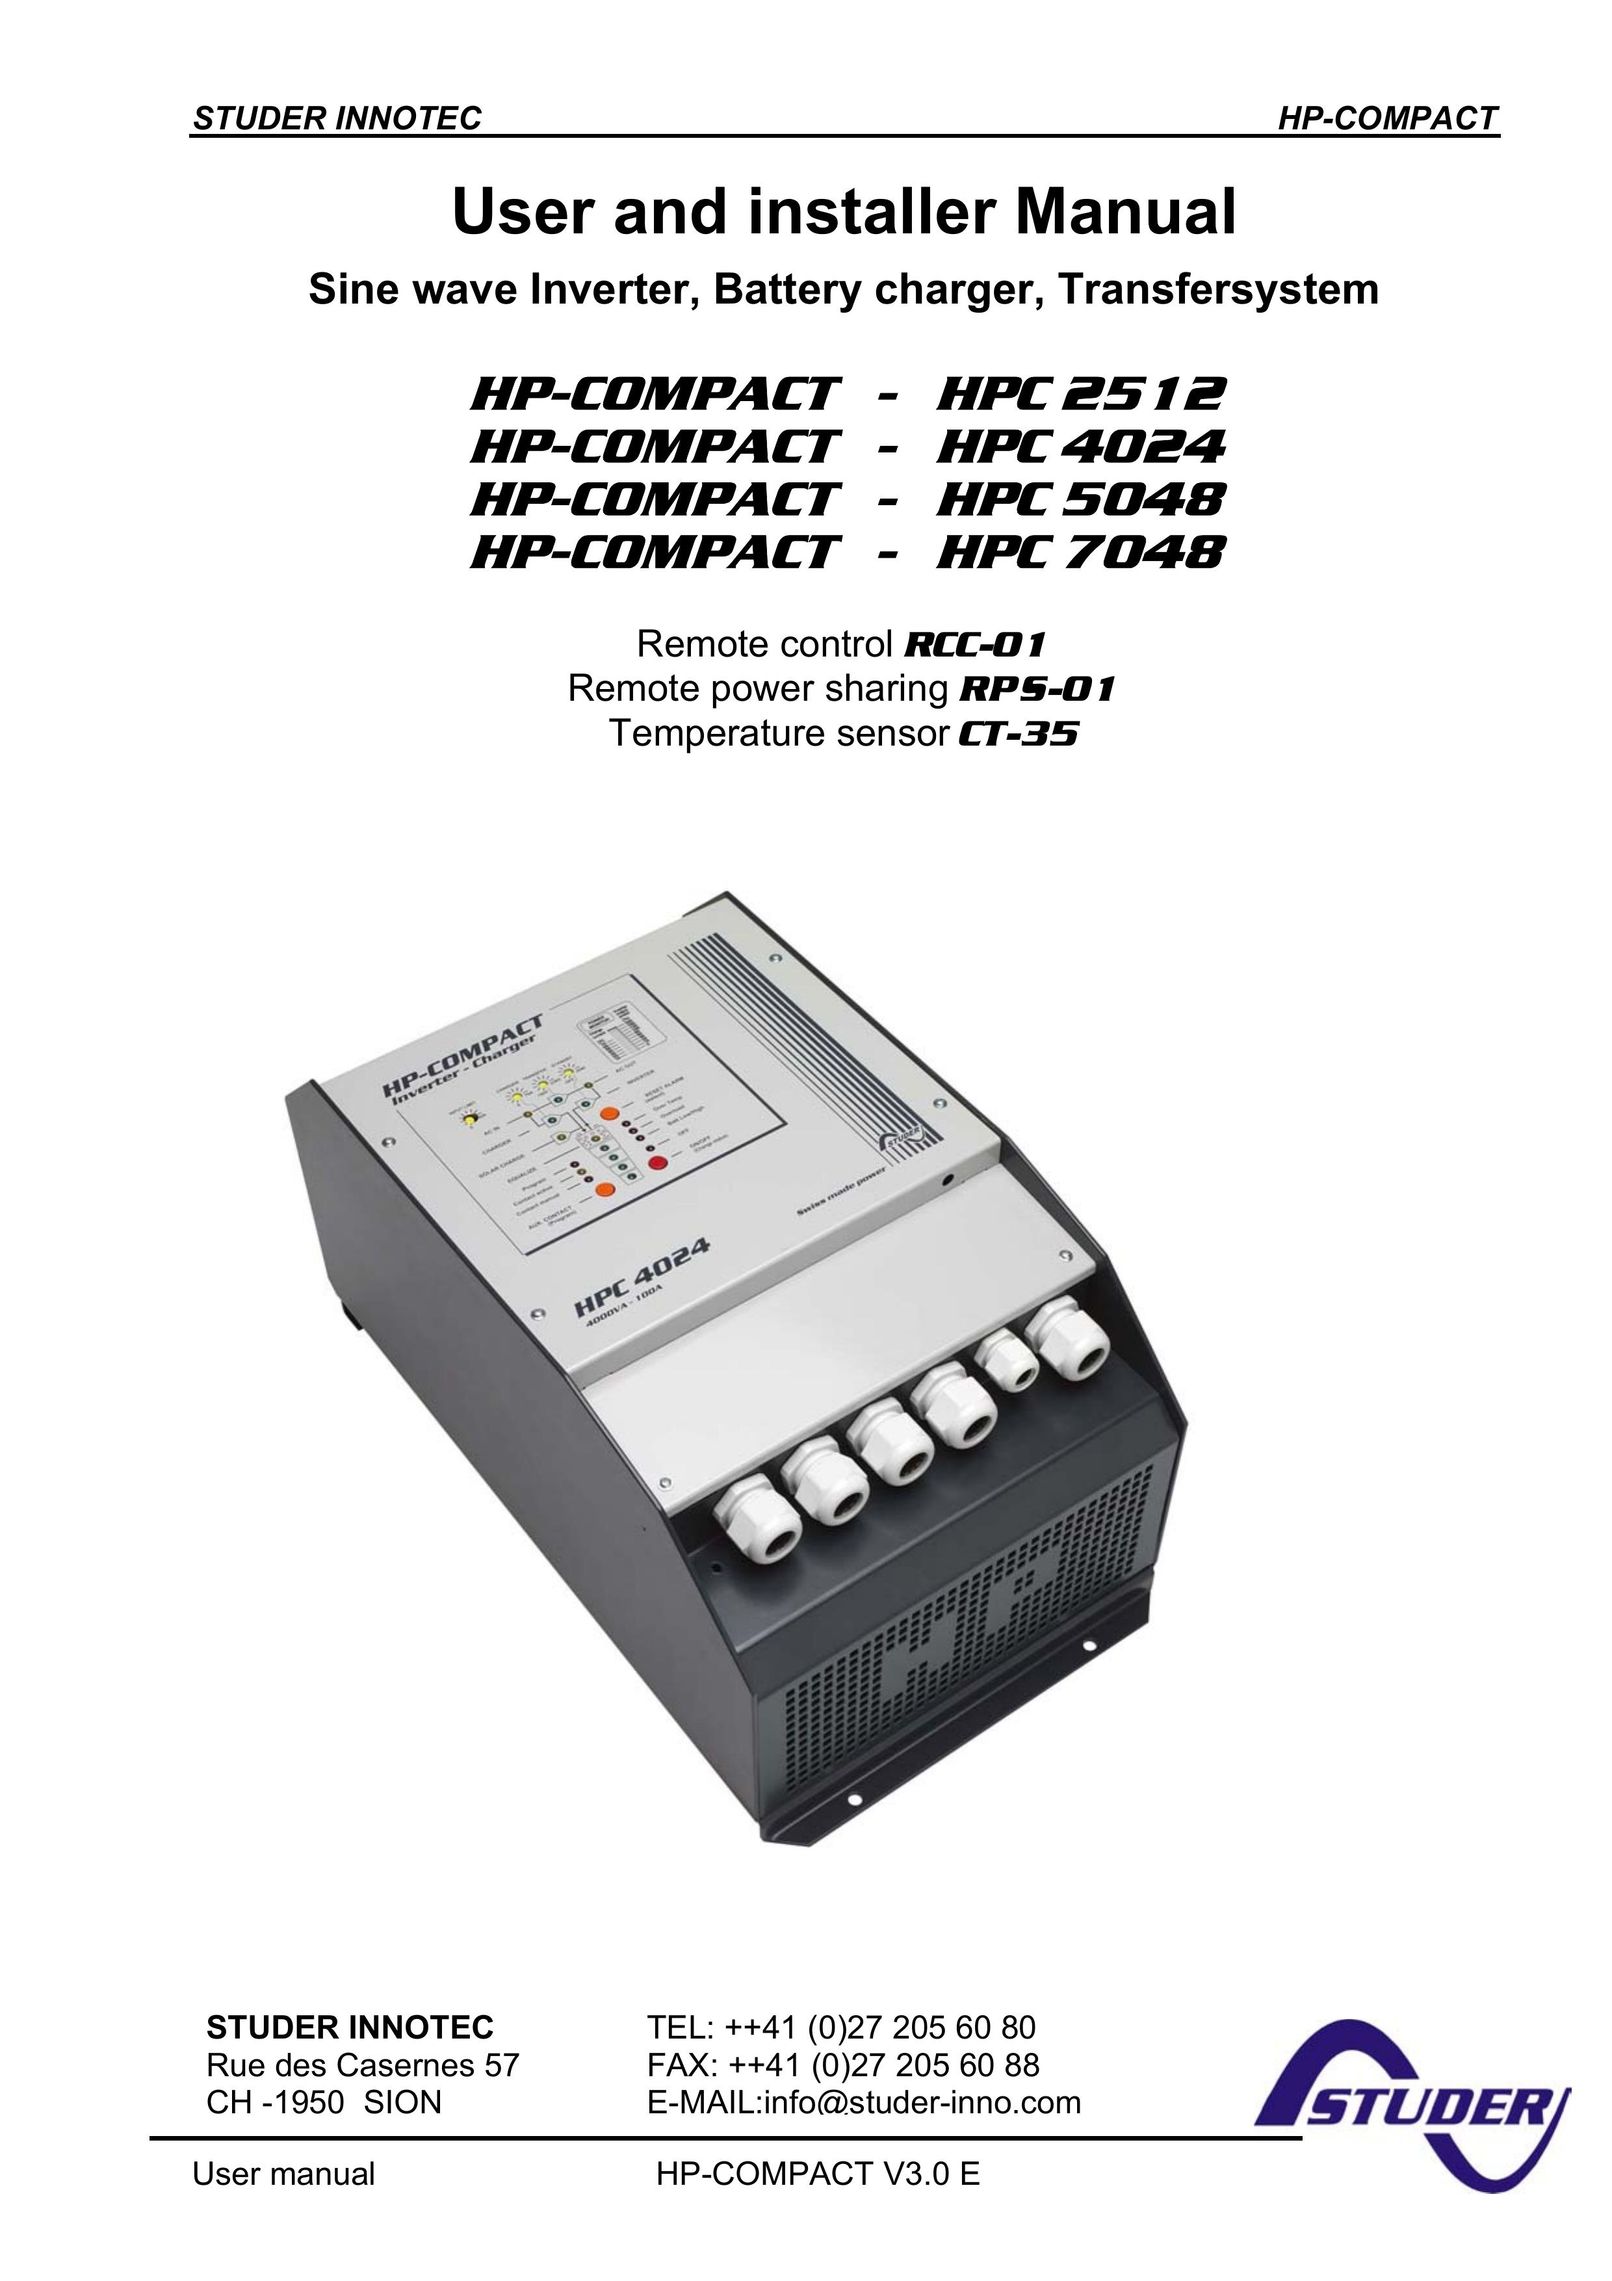 Studer Innotec HPC5048 Battery Charger User Manual